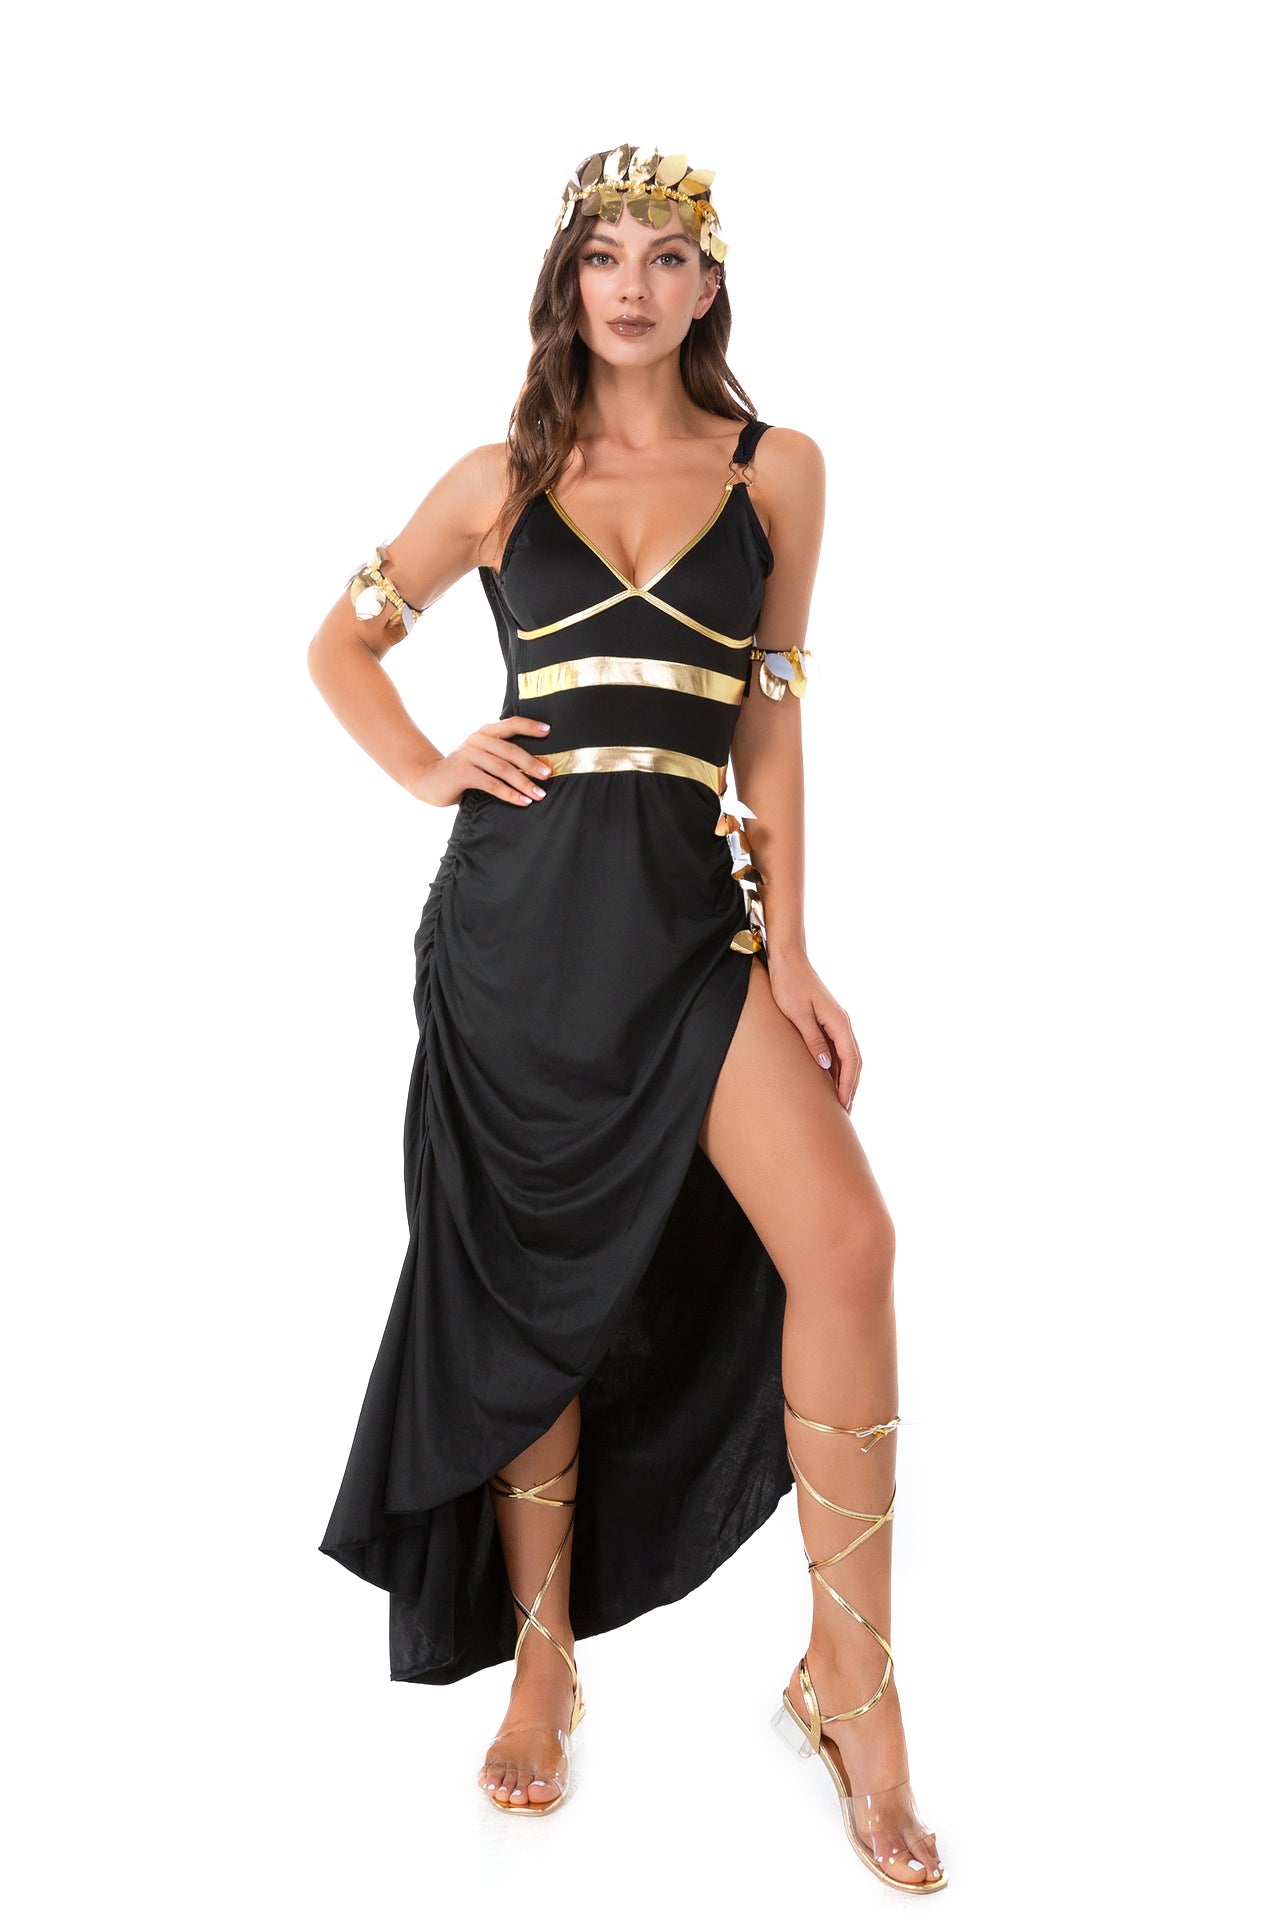 YESFASHION Halloween Cleopatra Cosplay Costume Dress